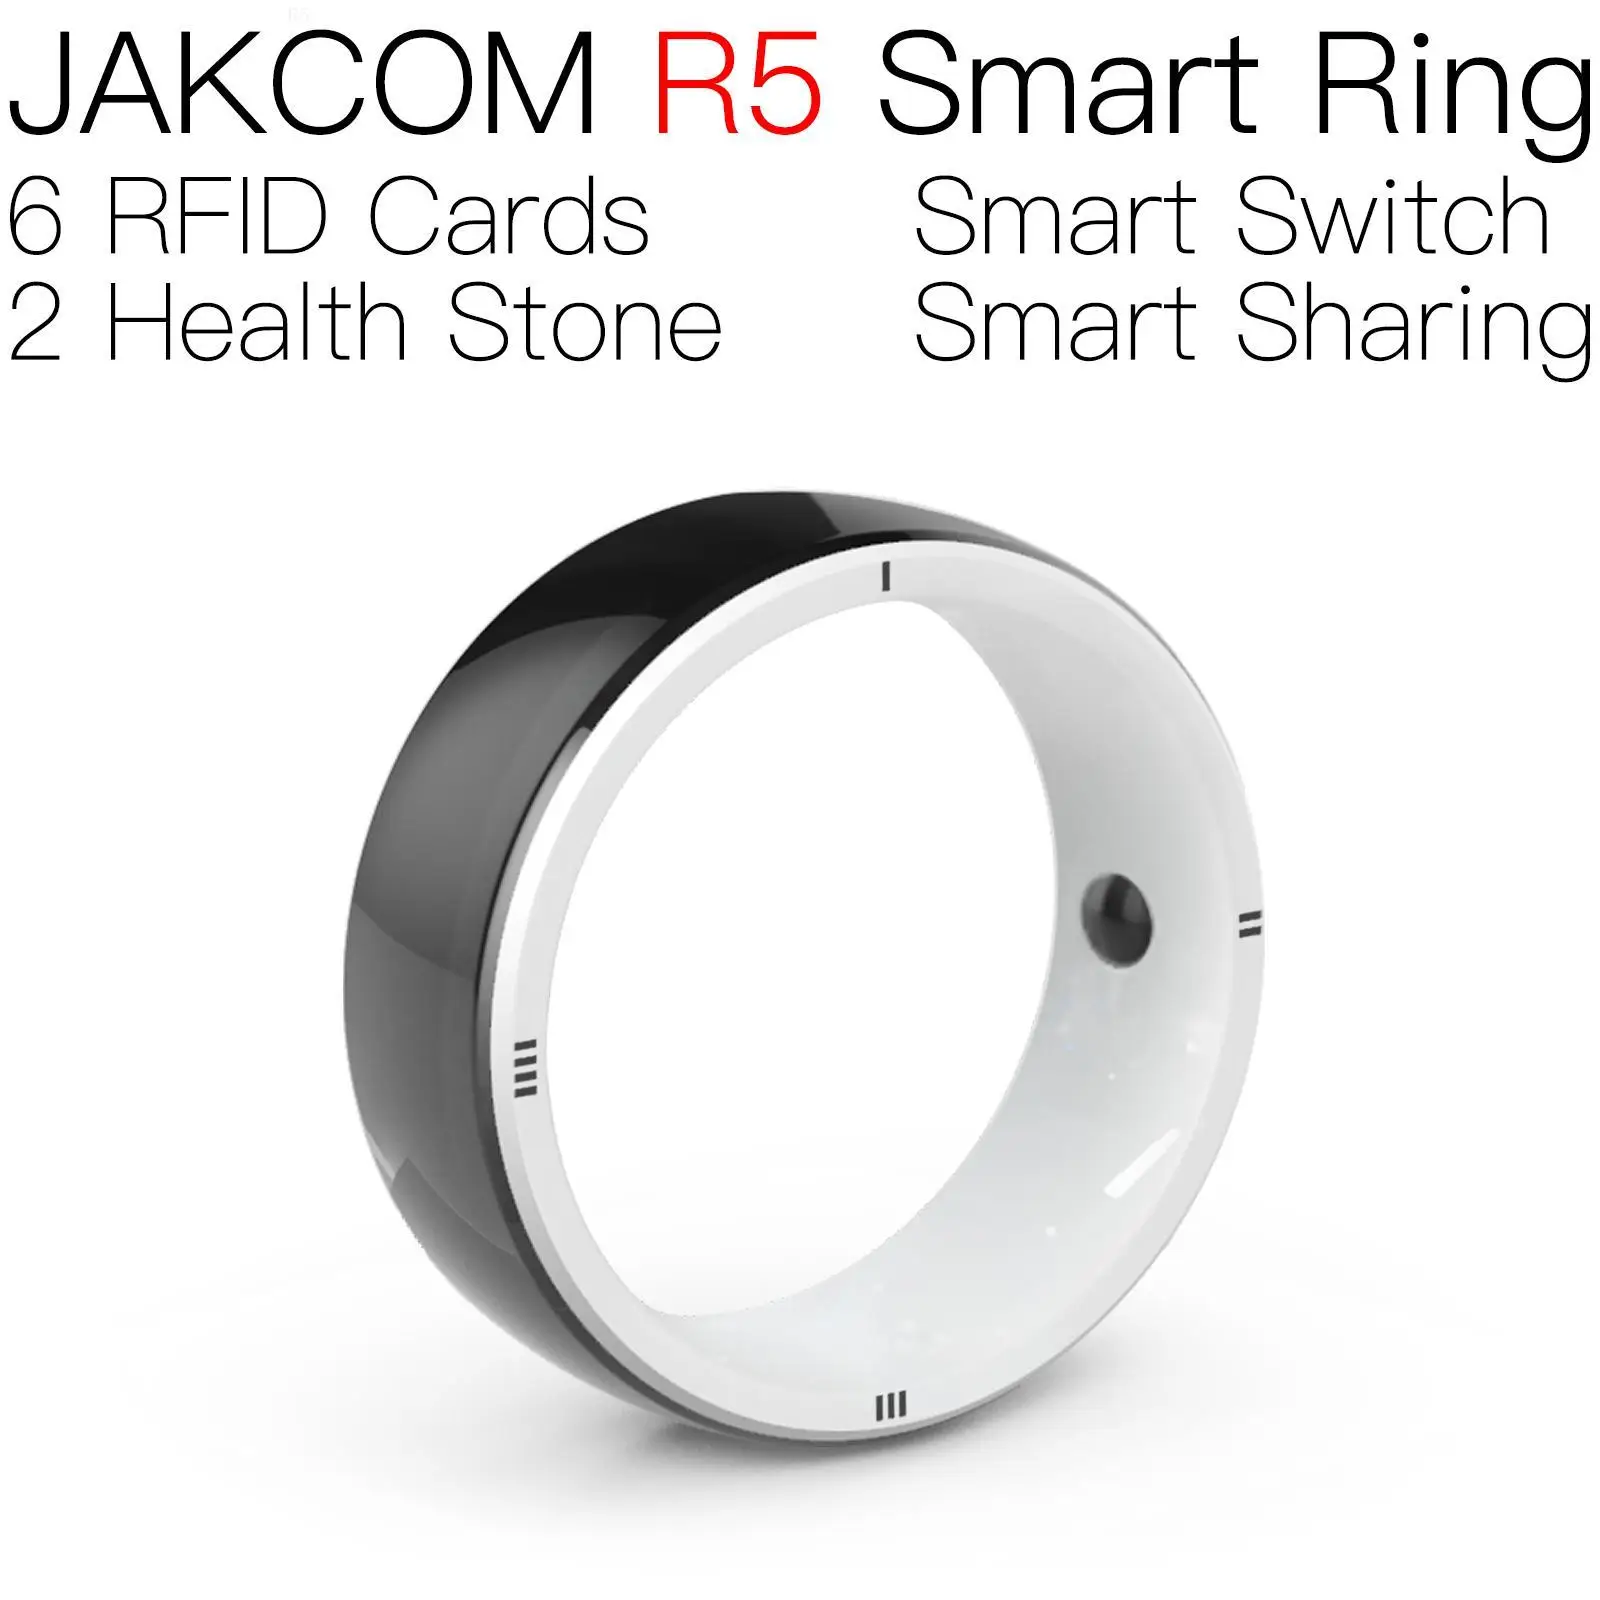 

JAKCOM R5 Smart Ring Newer than plus car id tag iso15693 hf rfid multiple keyfob rewritable copper 7 bytes uid